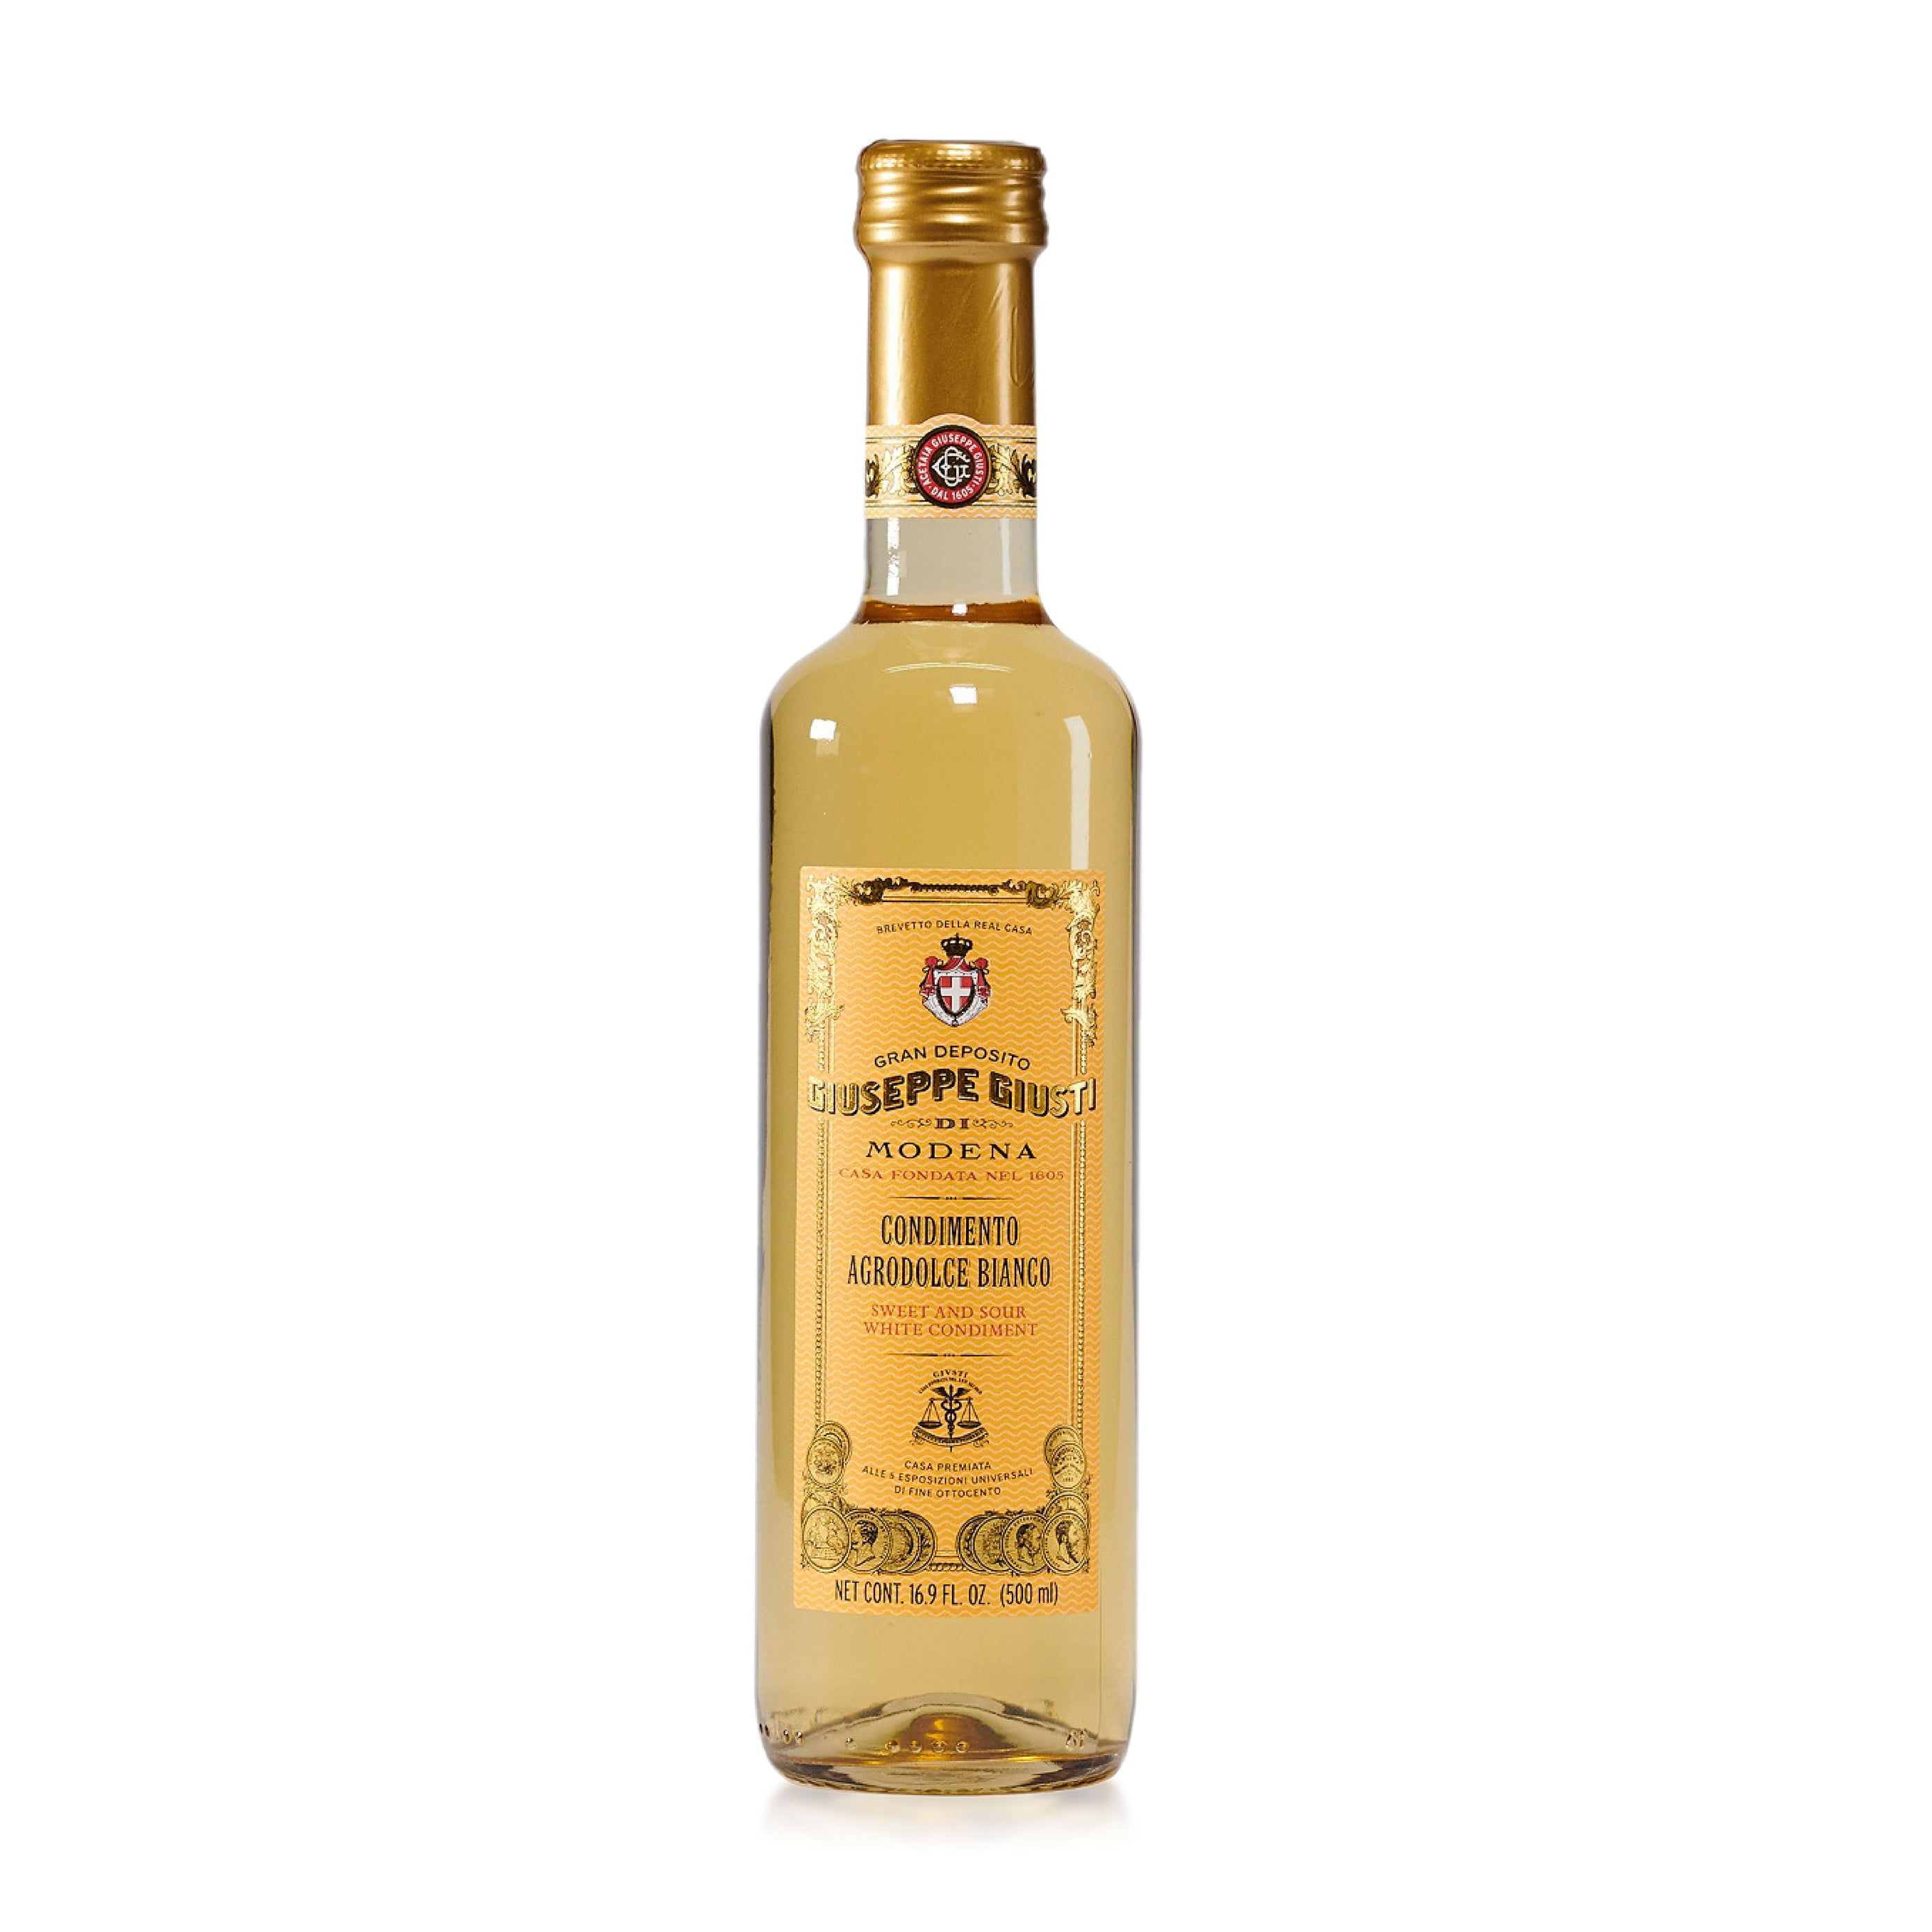 White Balsamic vinegar condiment of Modena by Giusti